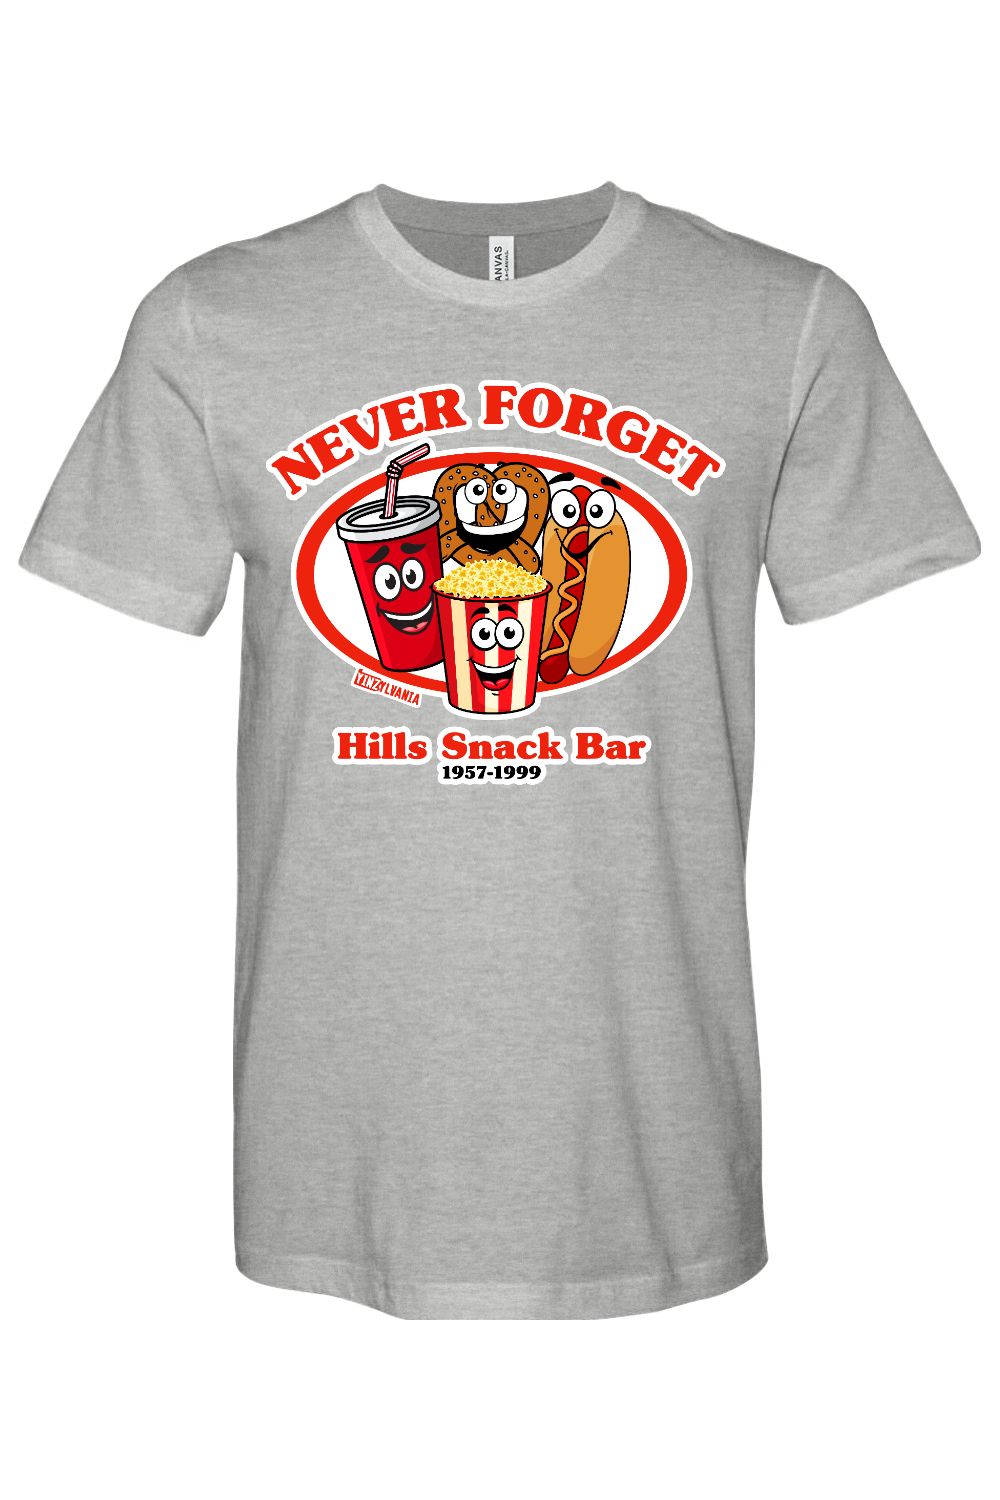 Never Forget - Hills Snack Bar - Yinzylvania